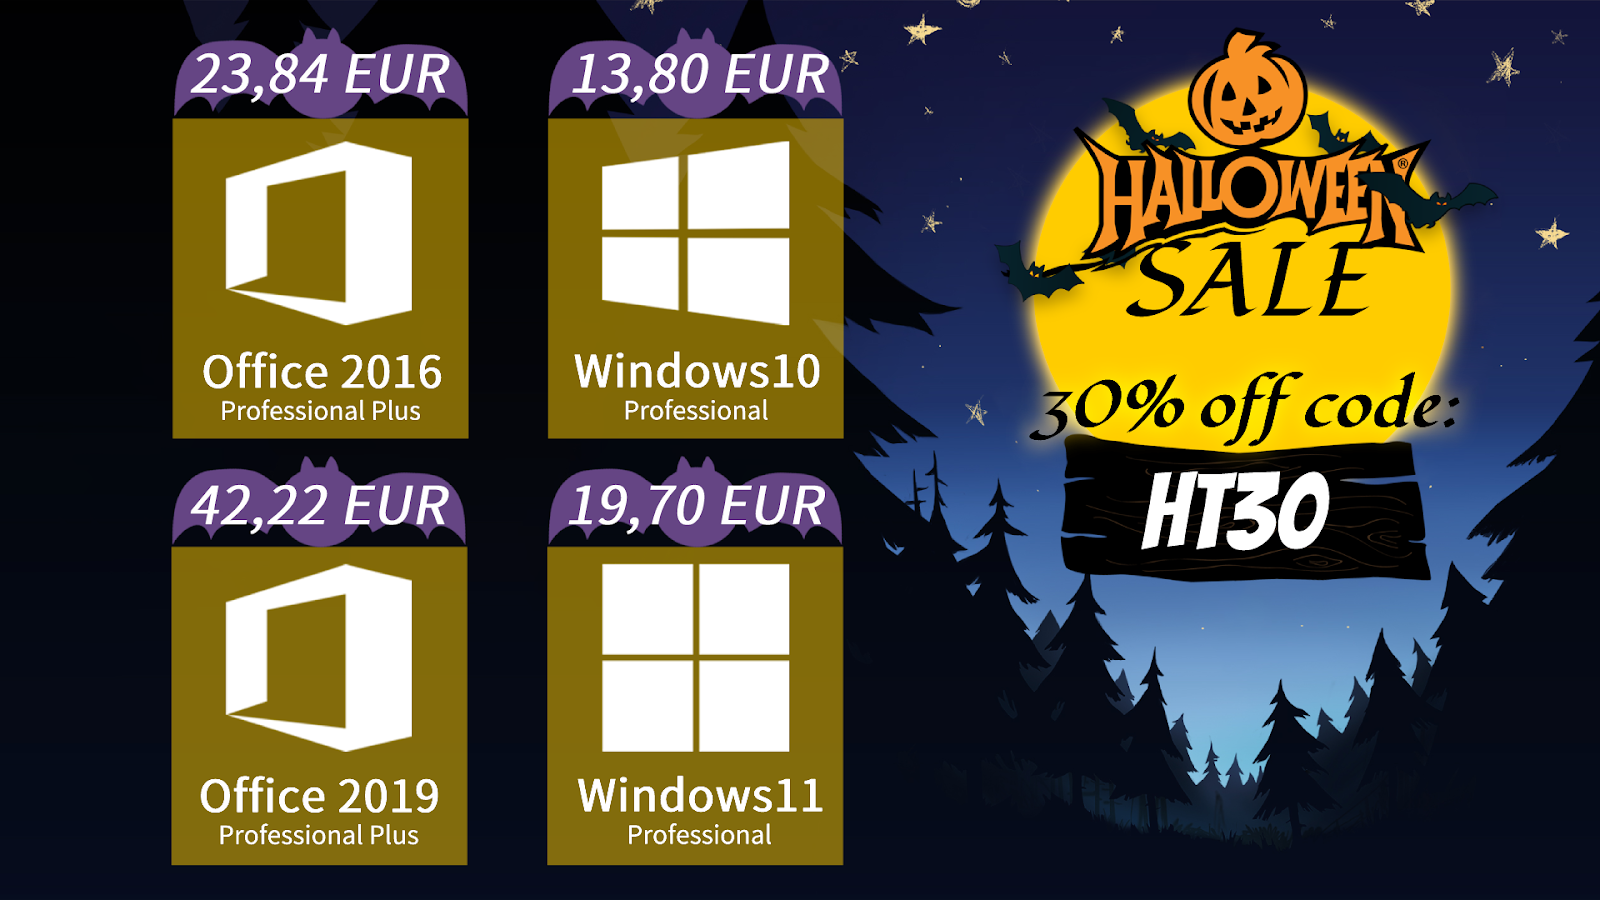 Halloween deals at Goodoffer24: Windows 10 and Office